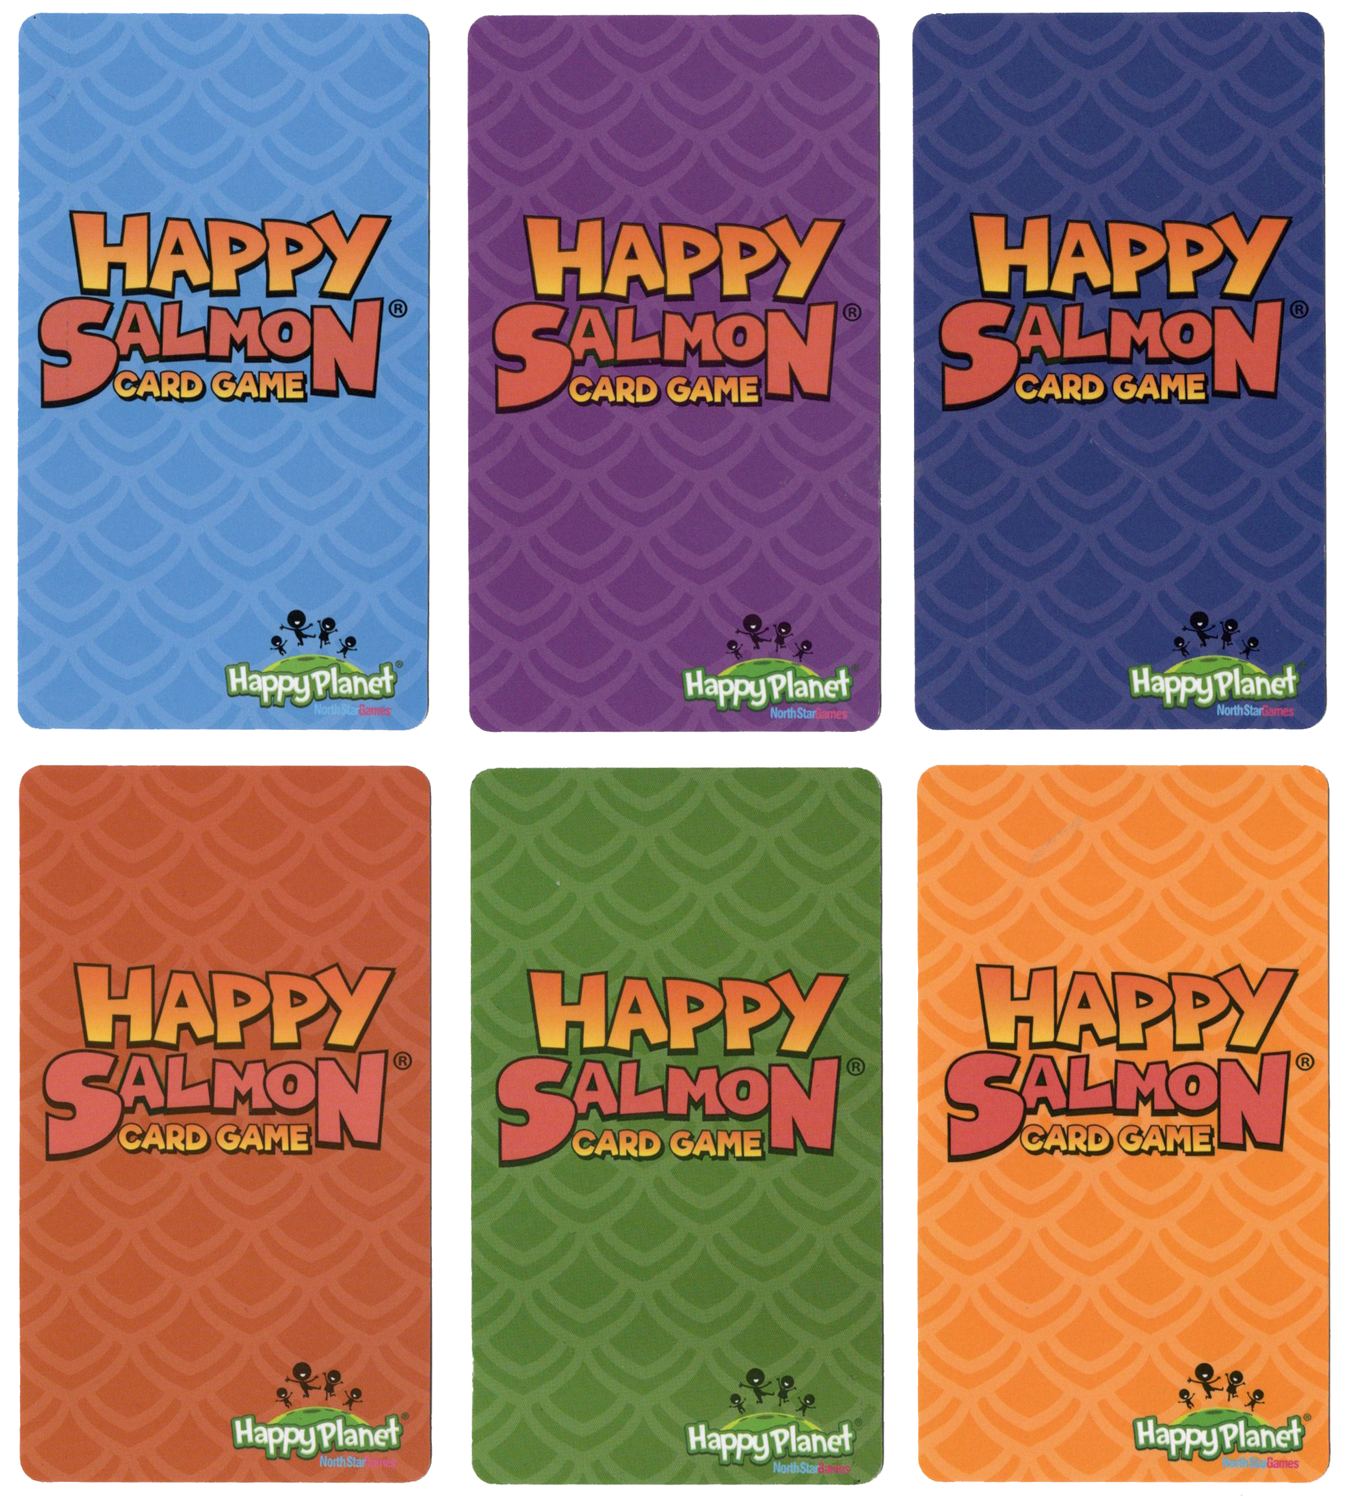 Happy-Salmon-Card-Backs